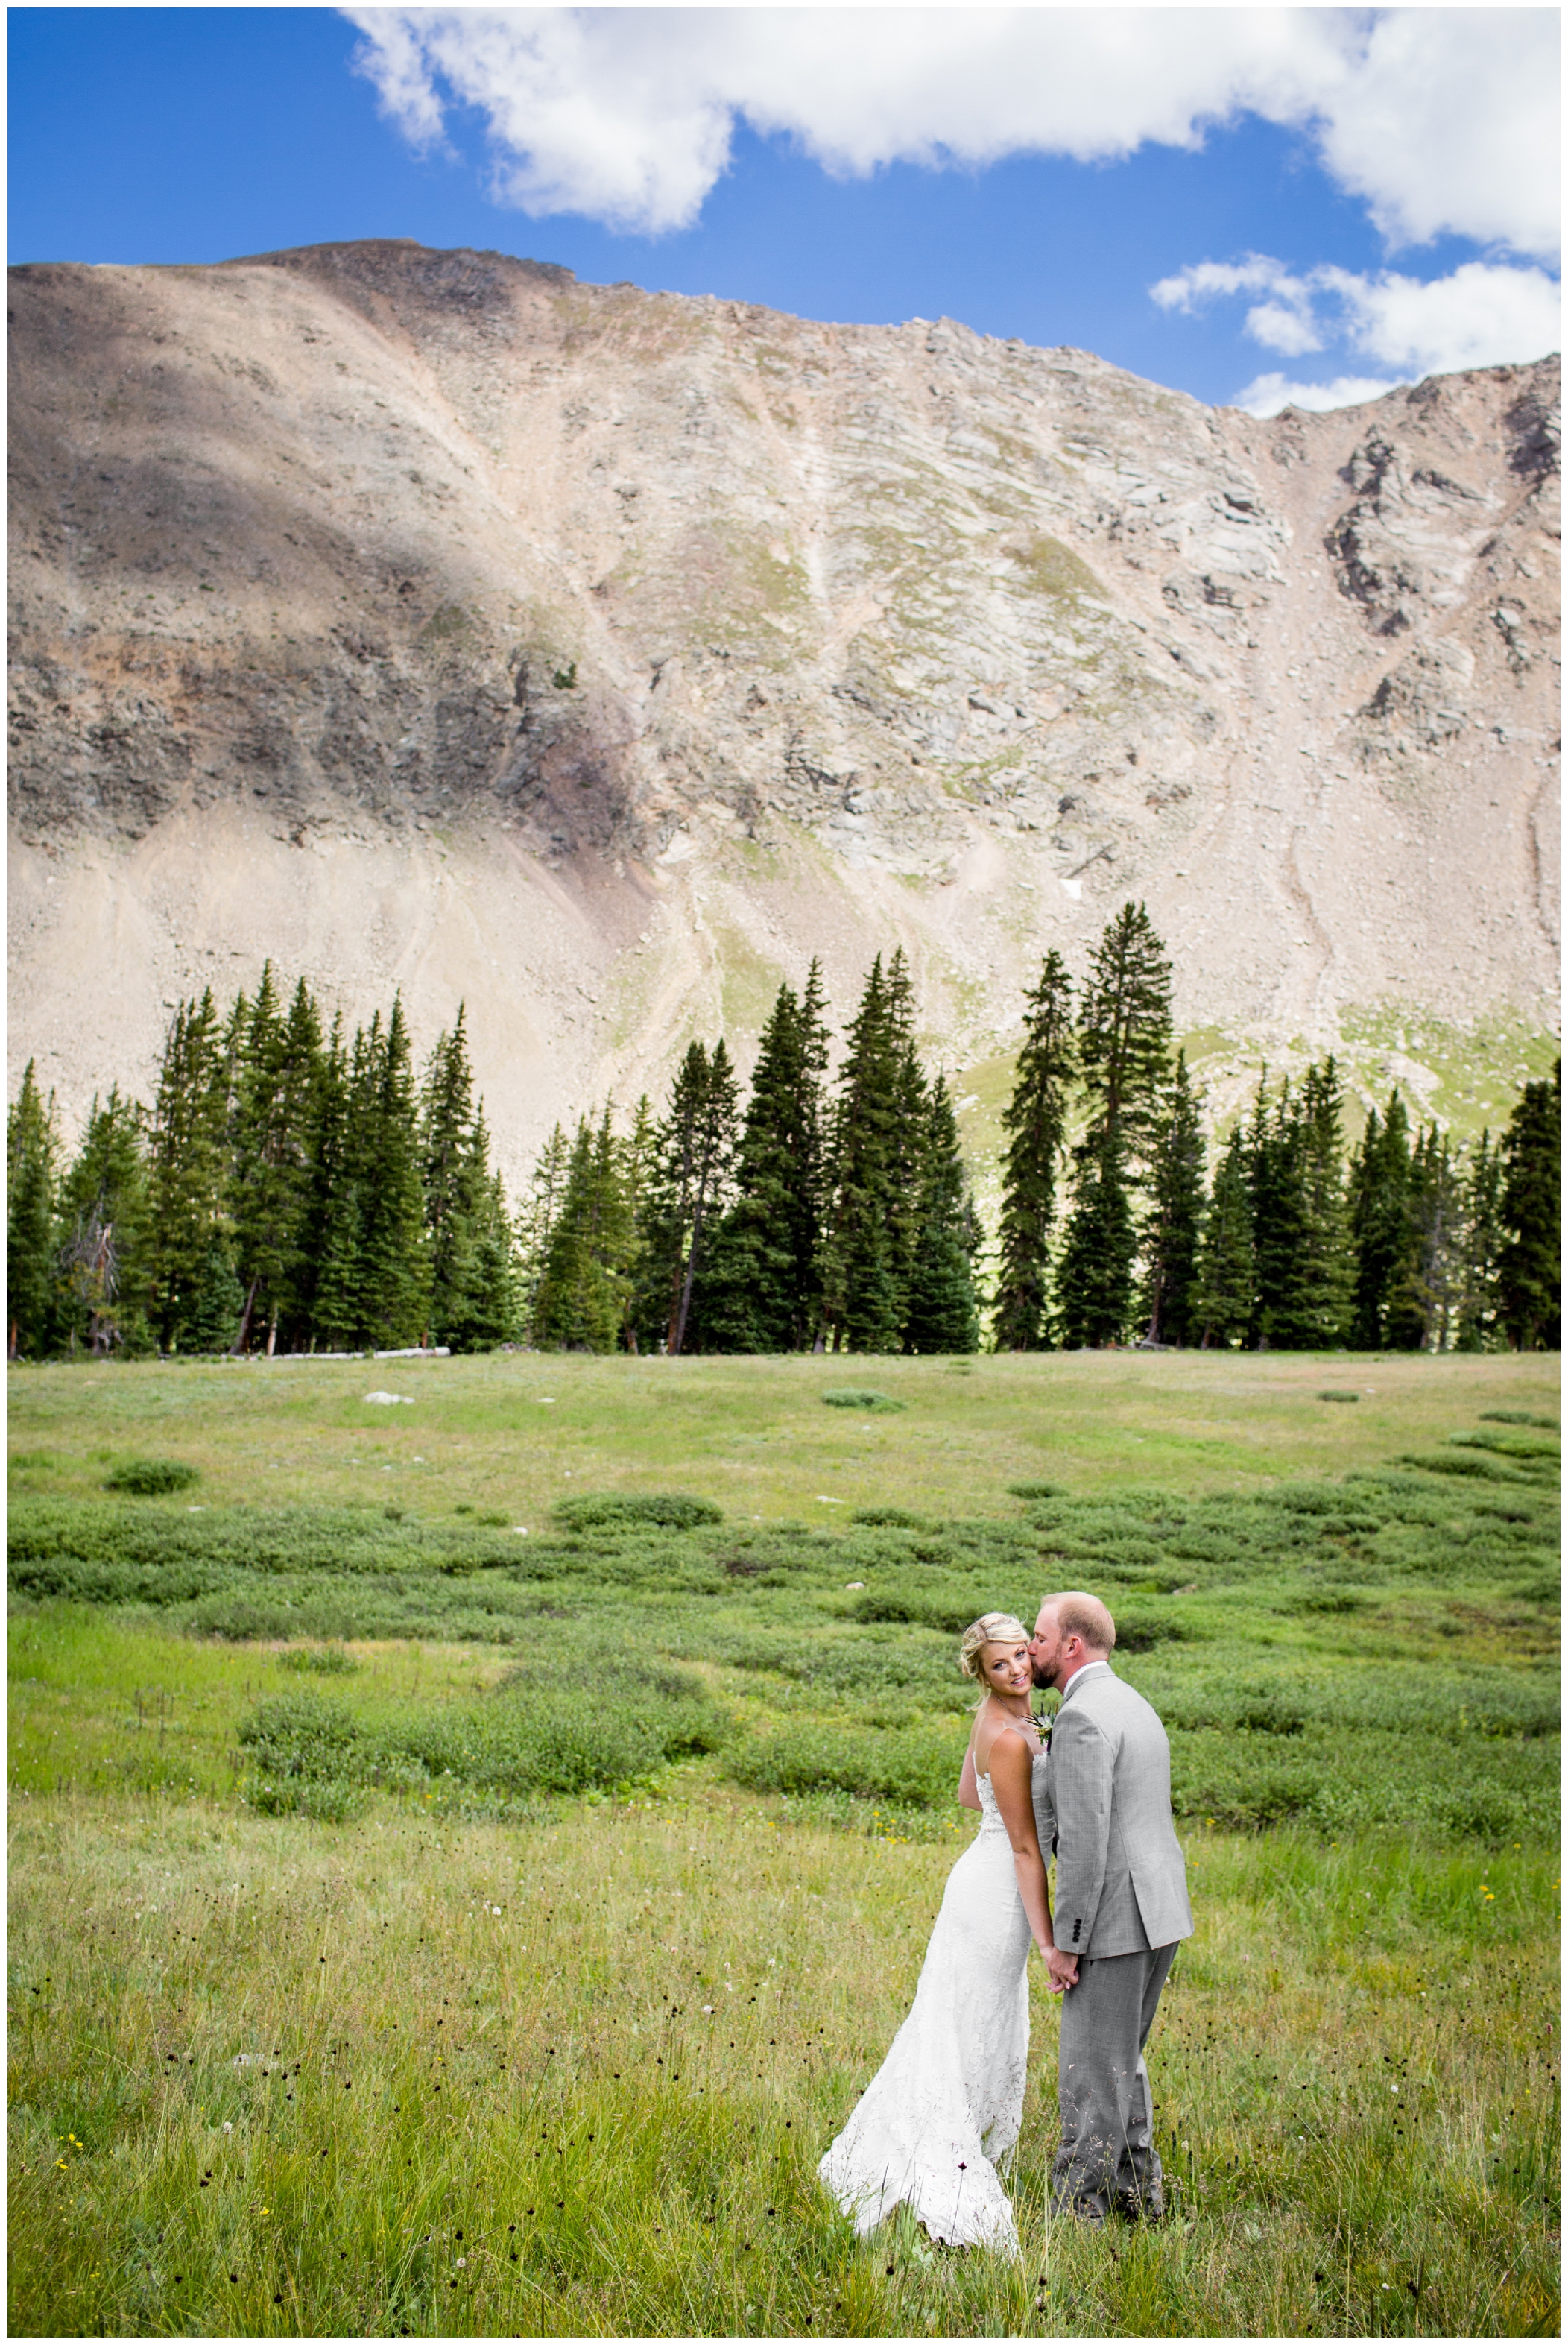 Colorado ski resort wedding photos at one of the best mountain wedding venues Arapahoe Basin